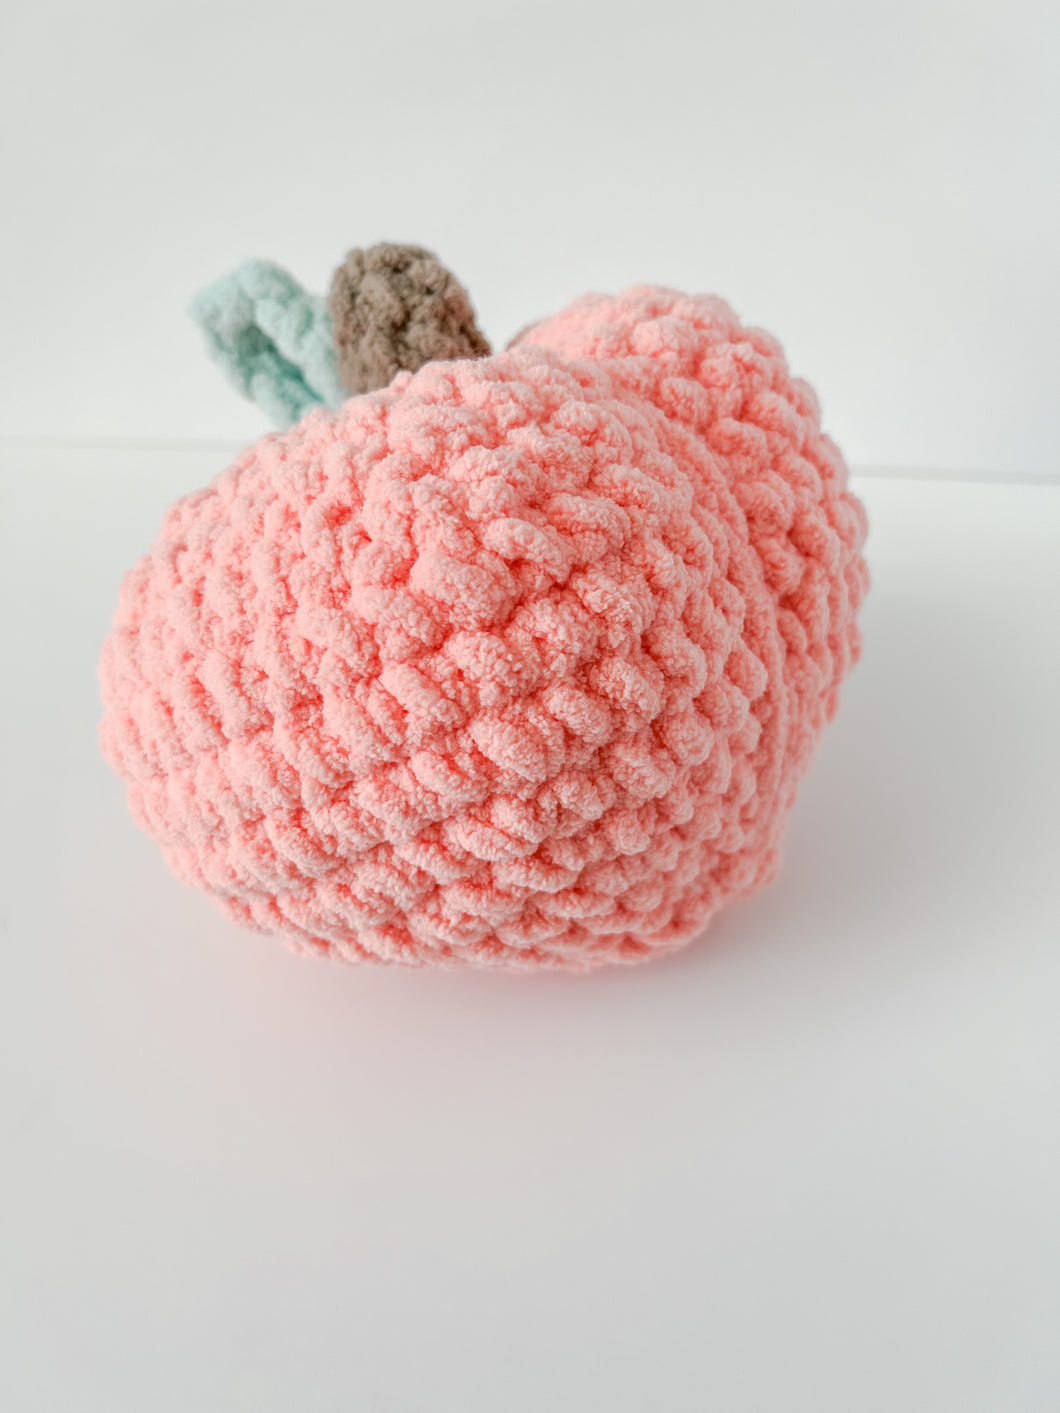 The Peach Paradise Crochet Pattern